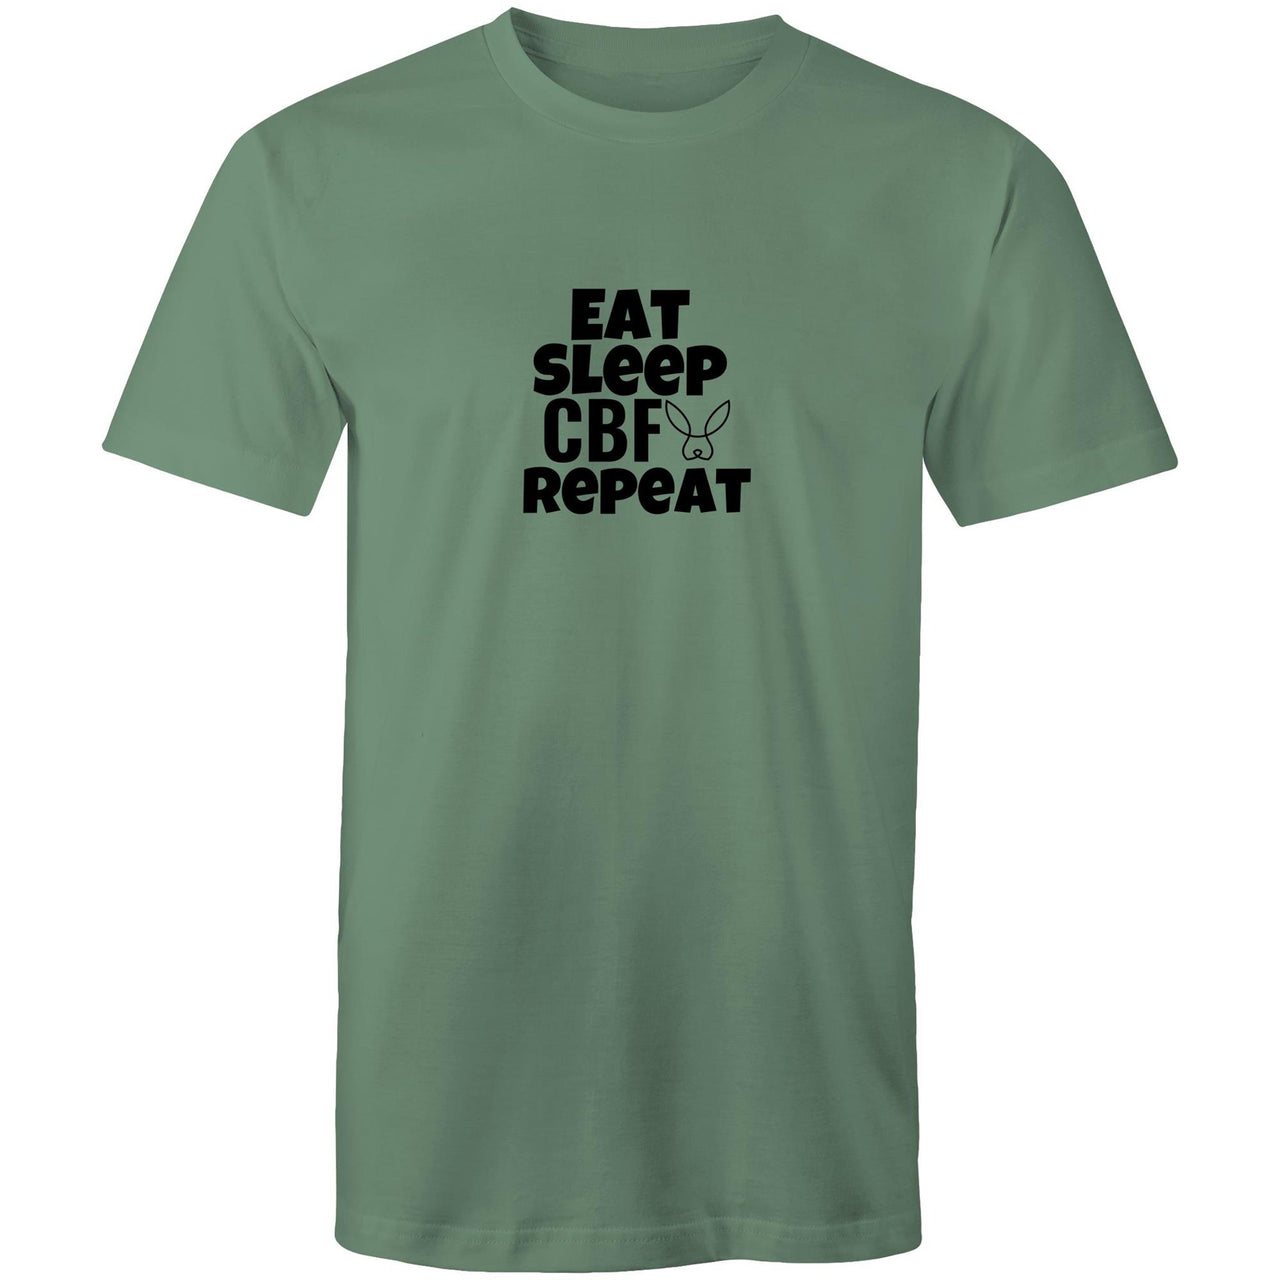 Eat Sleep CBF Repeat Crew green T-Shirt by CBF Clothing